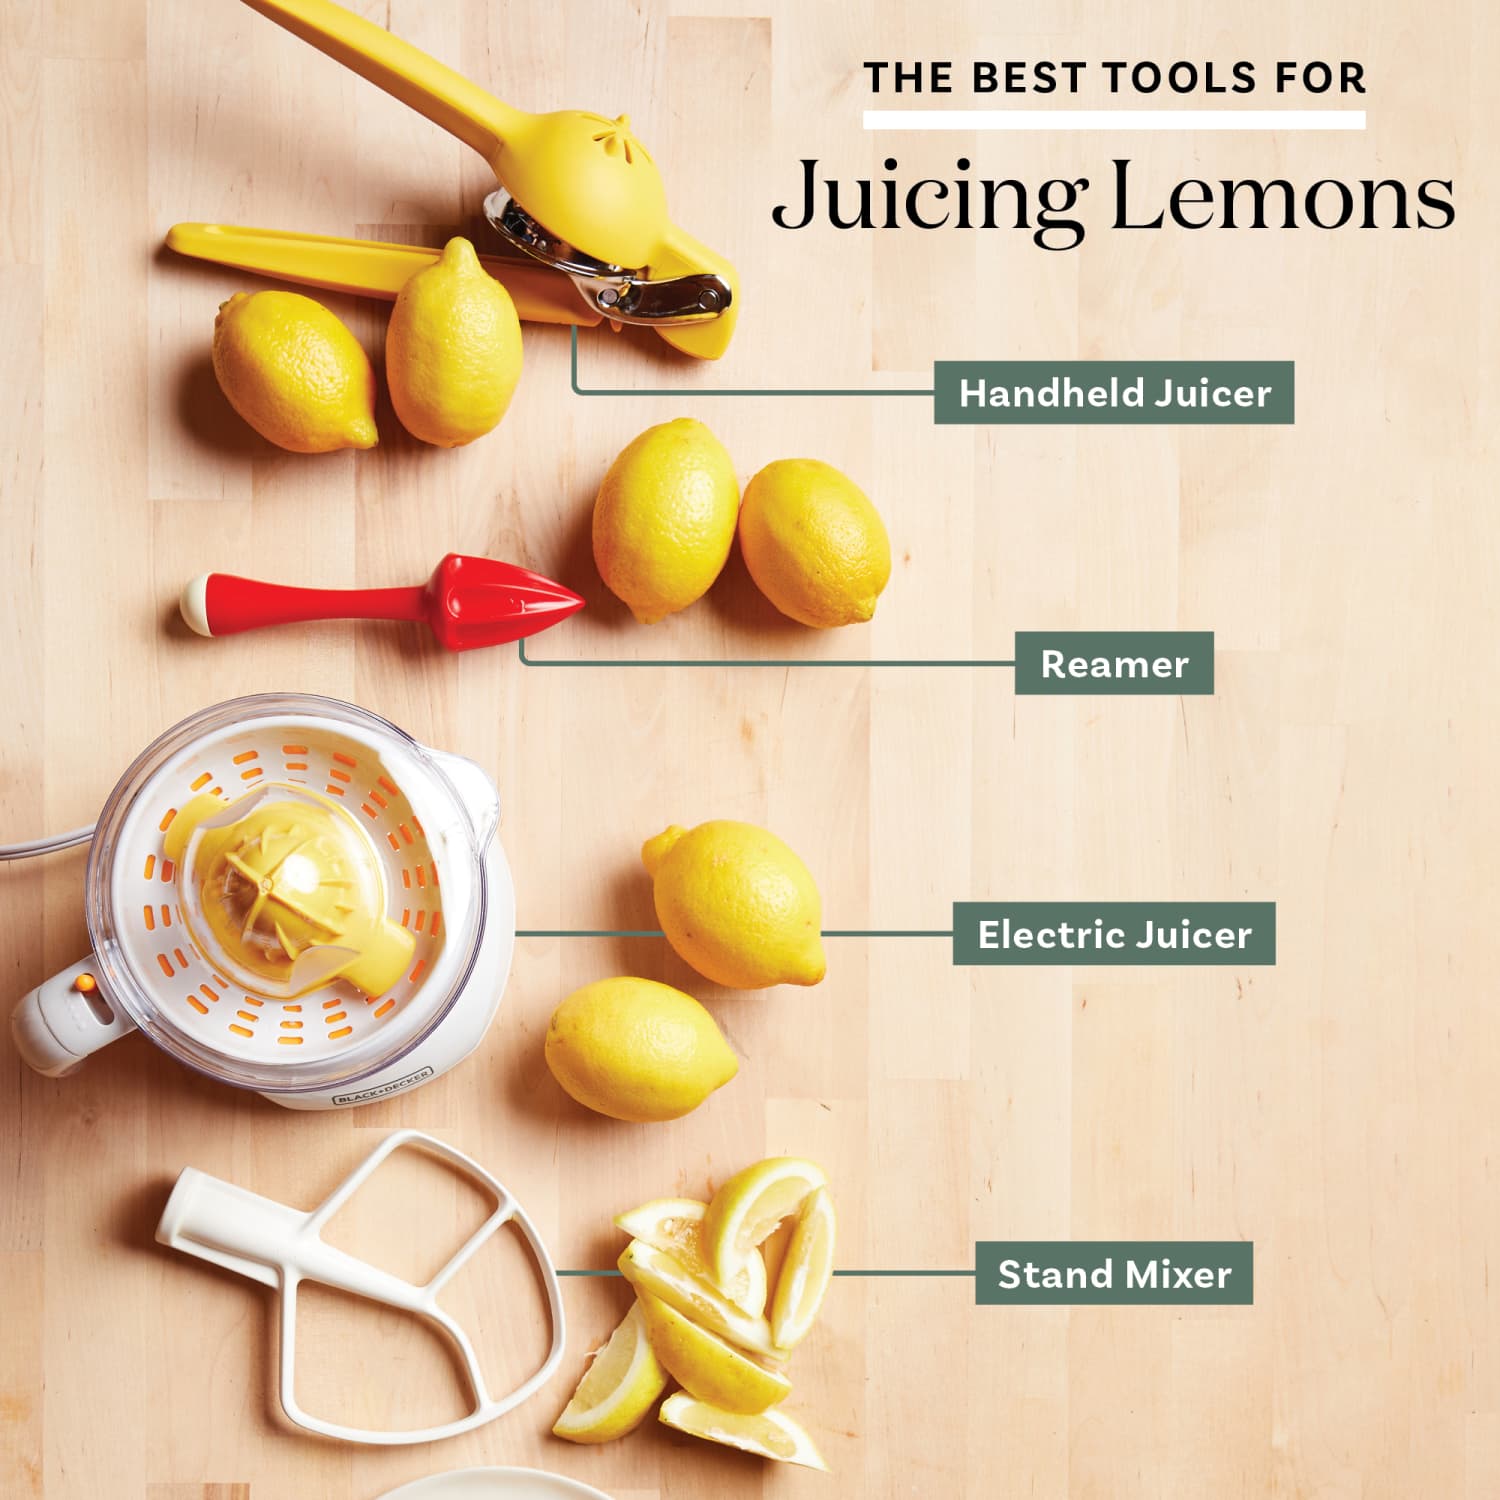 Can I Use A Citrus Juicer For Lemons?